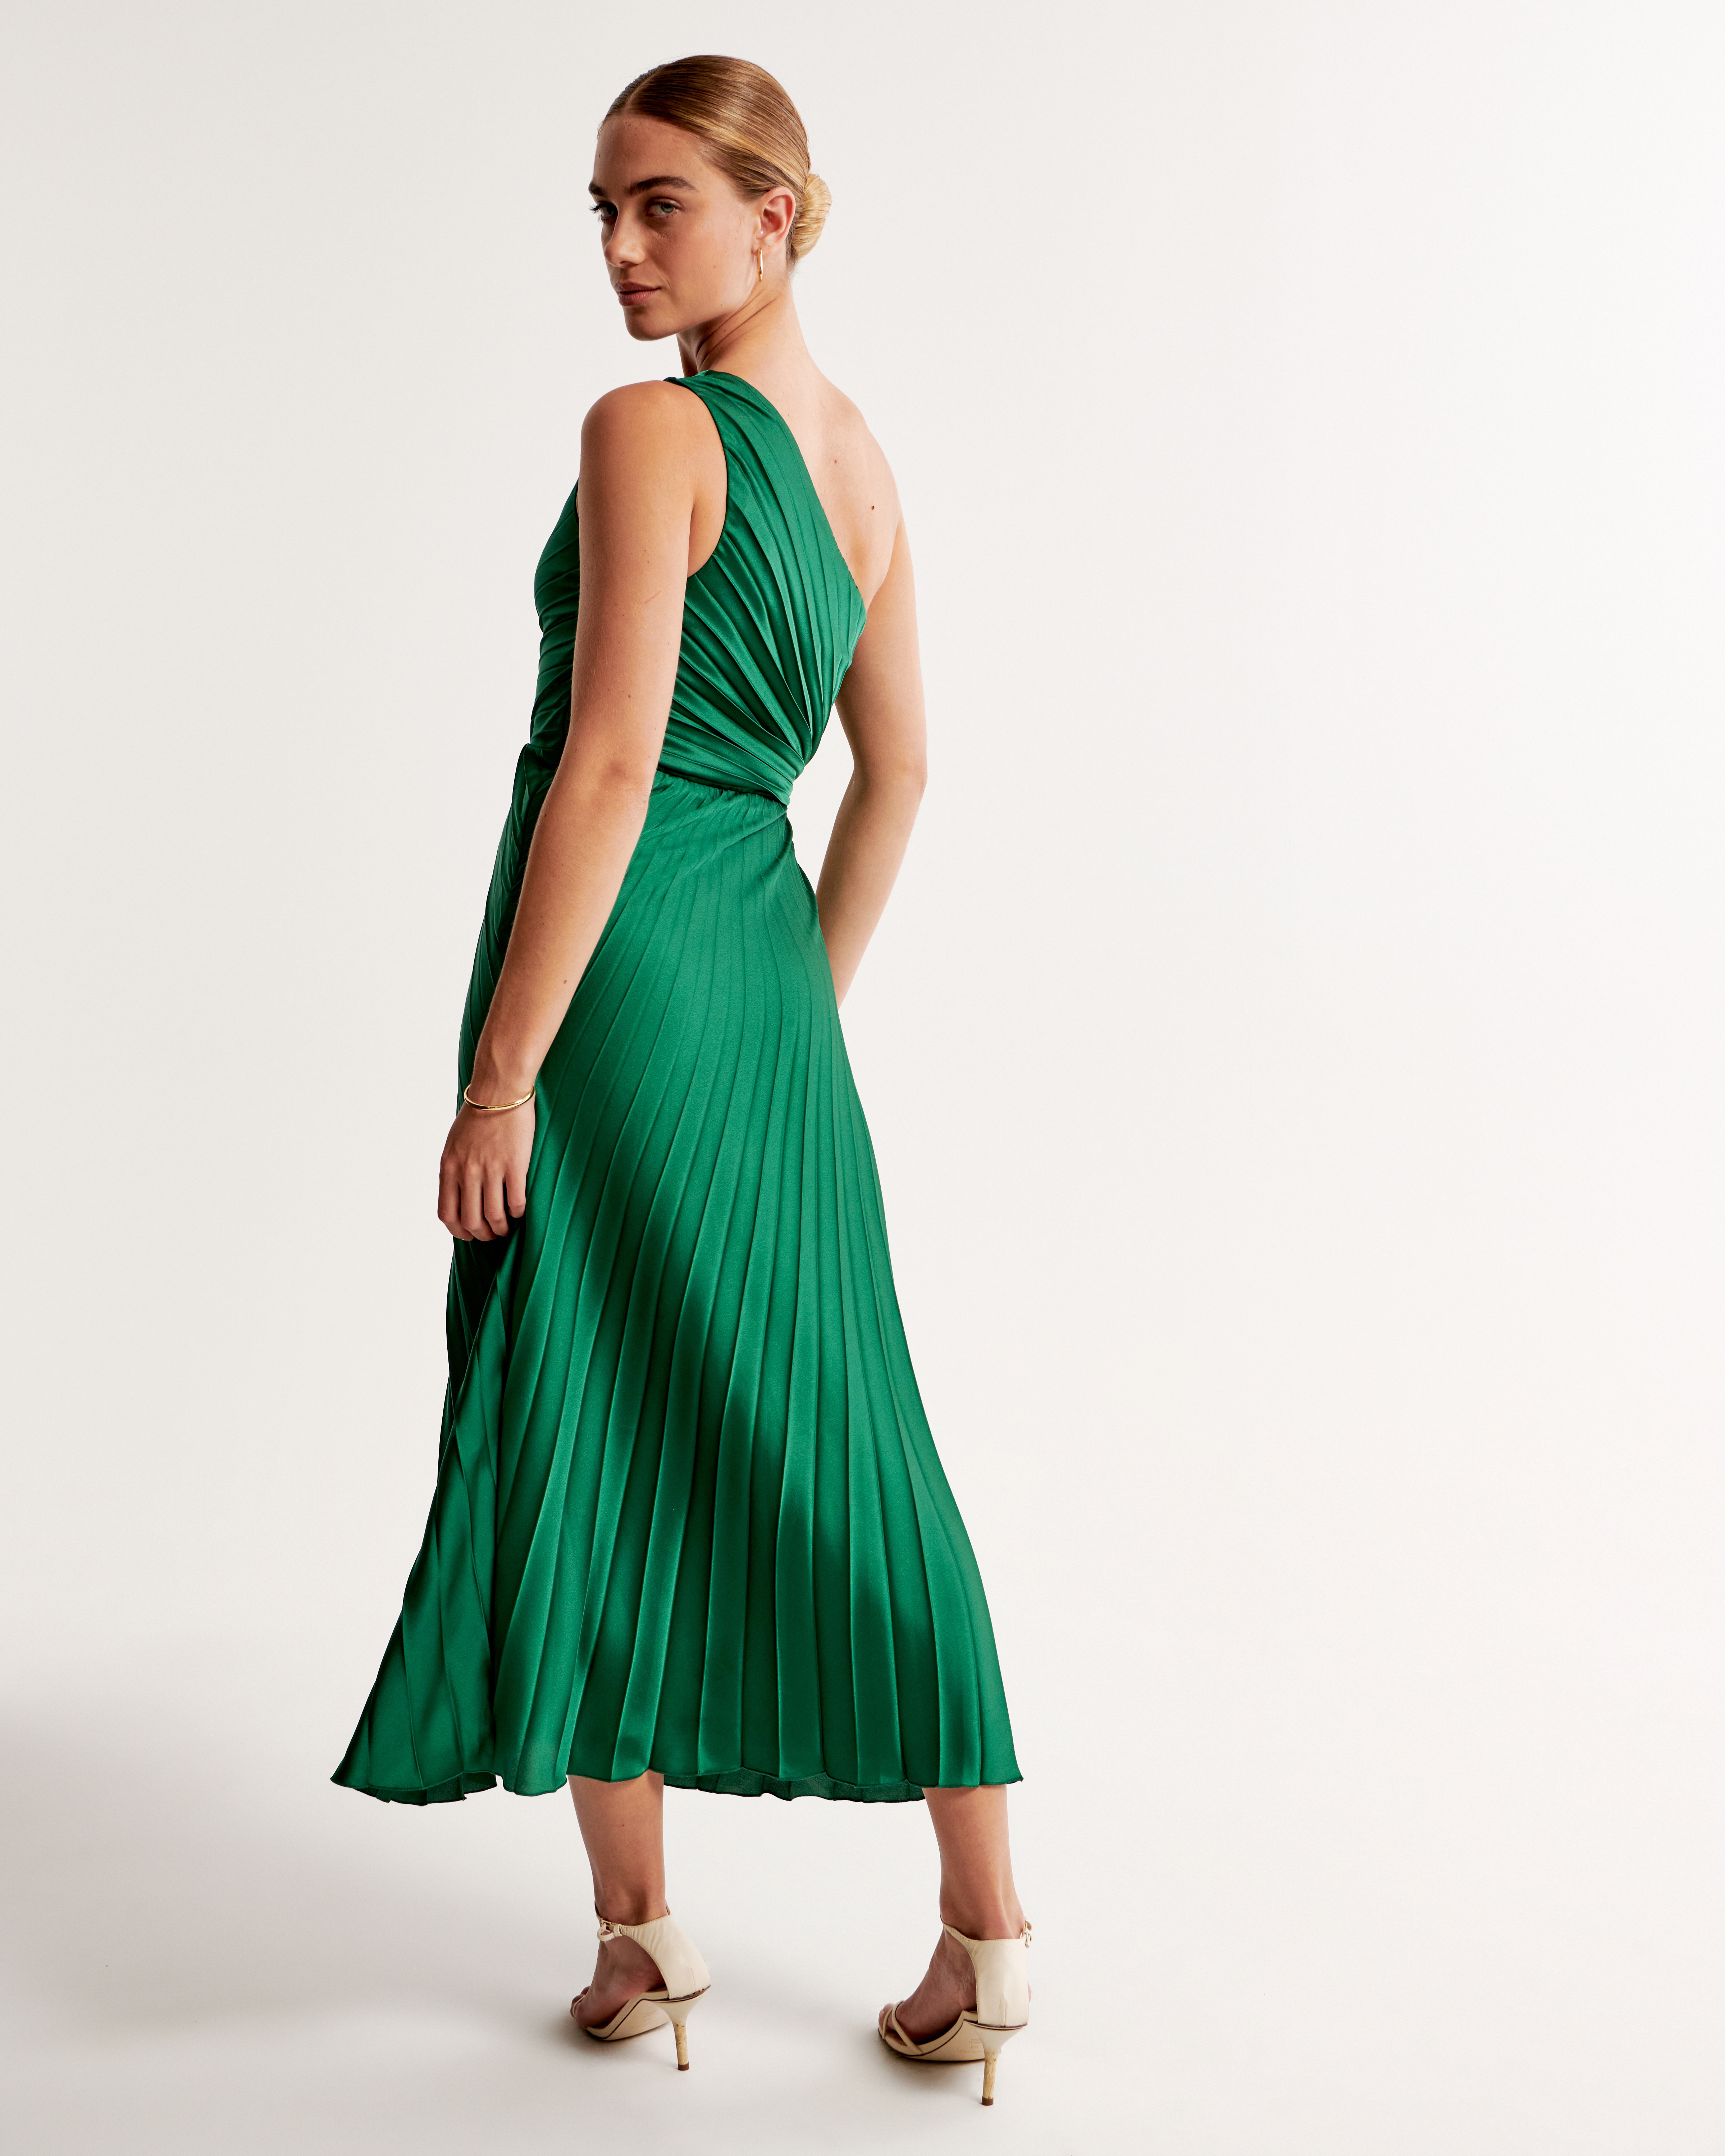 abercrombie green dress